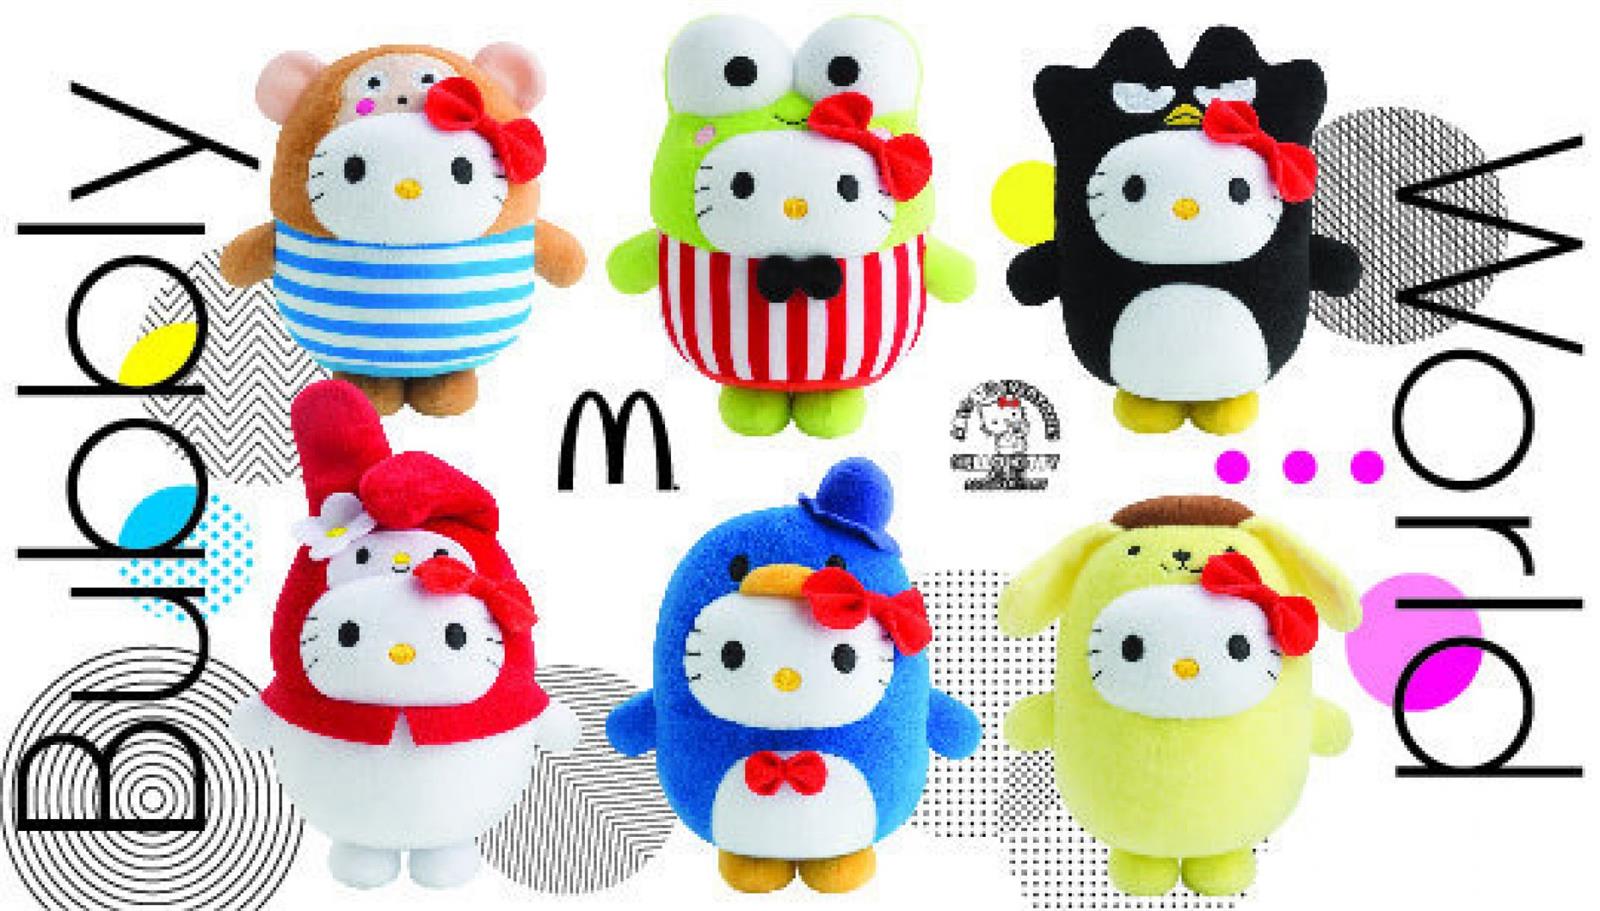 McDonald's Hello Kitty Bubbly World Collector's set